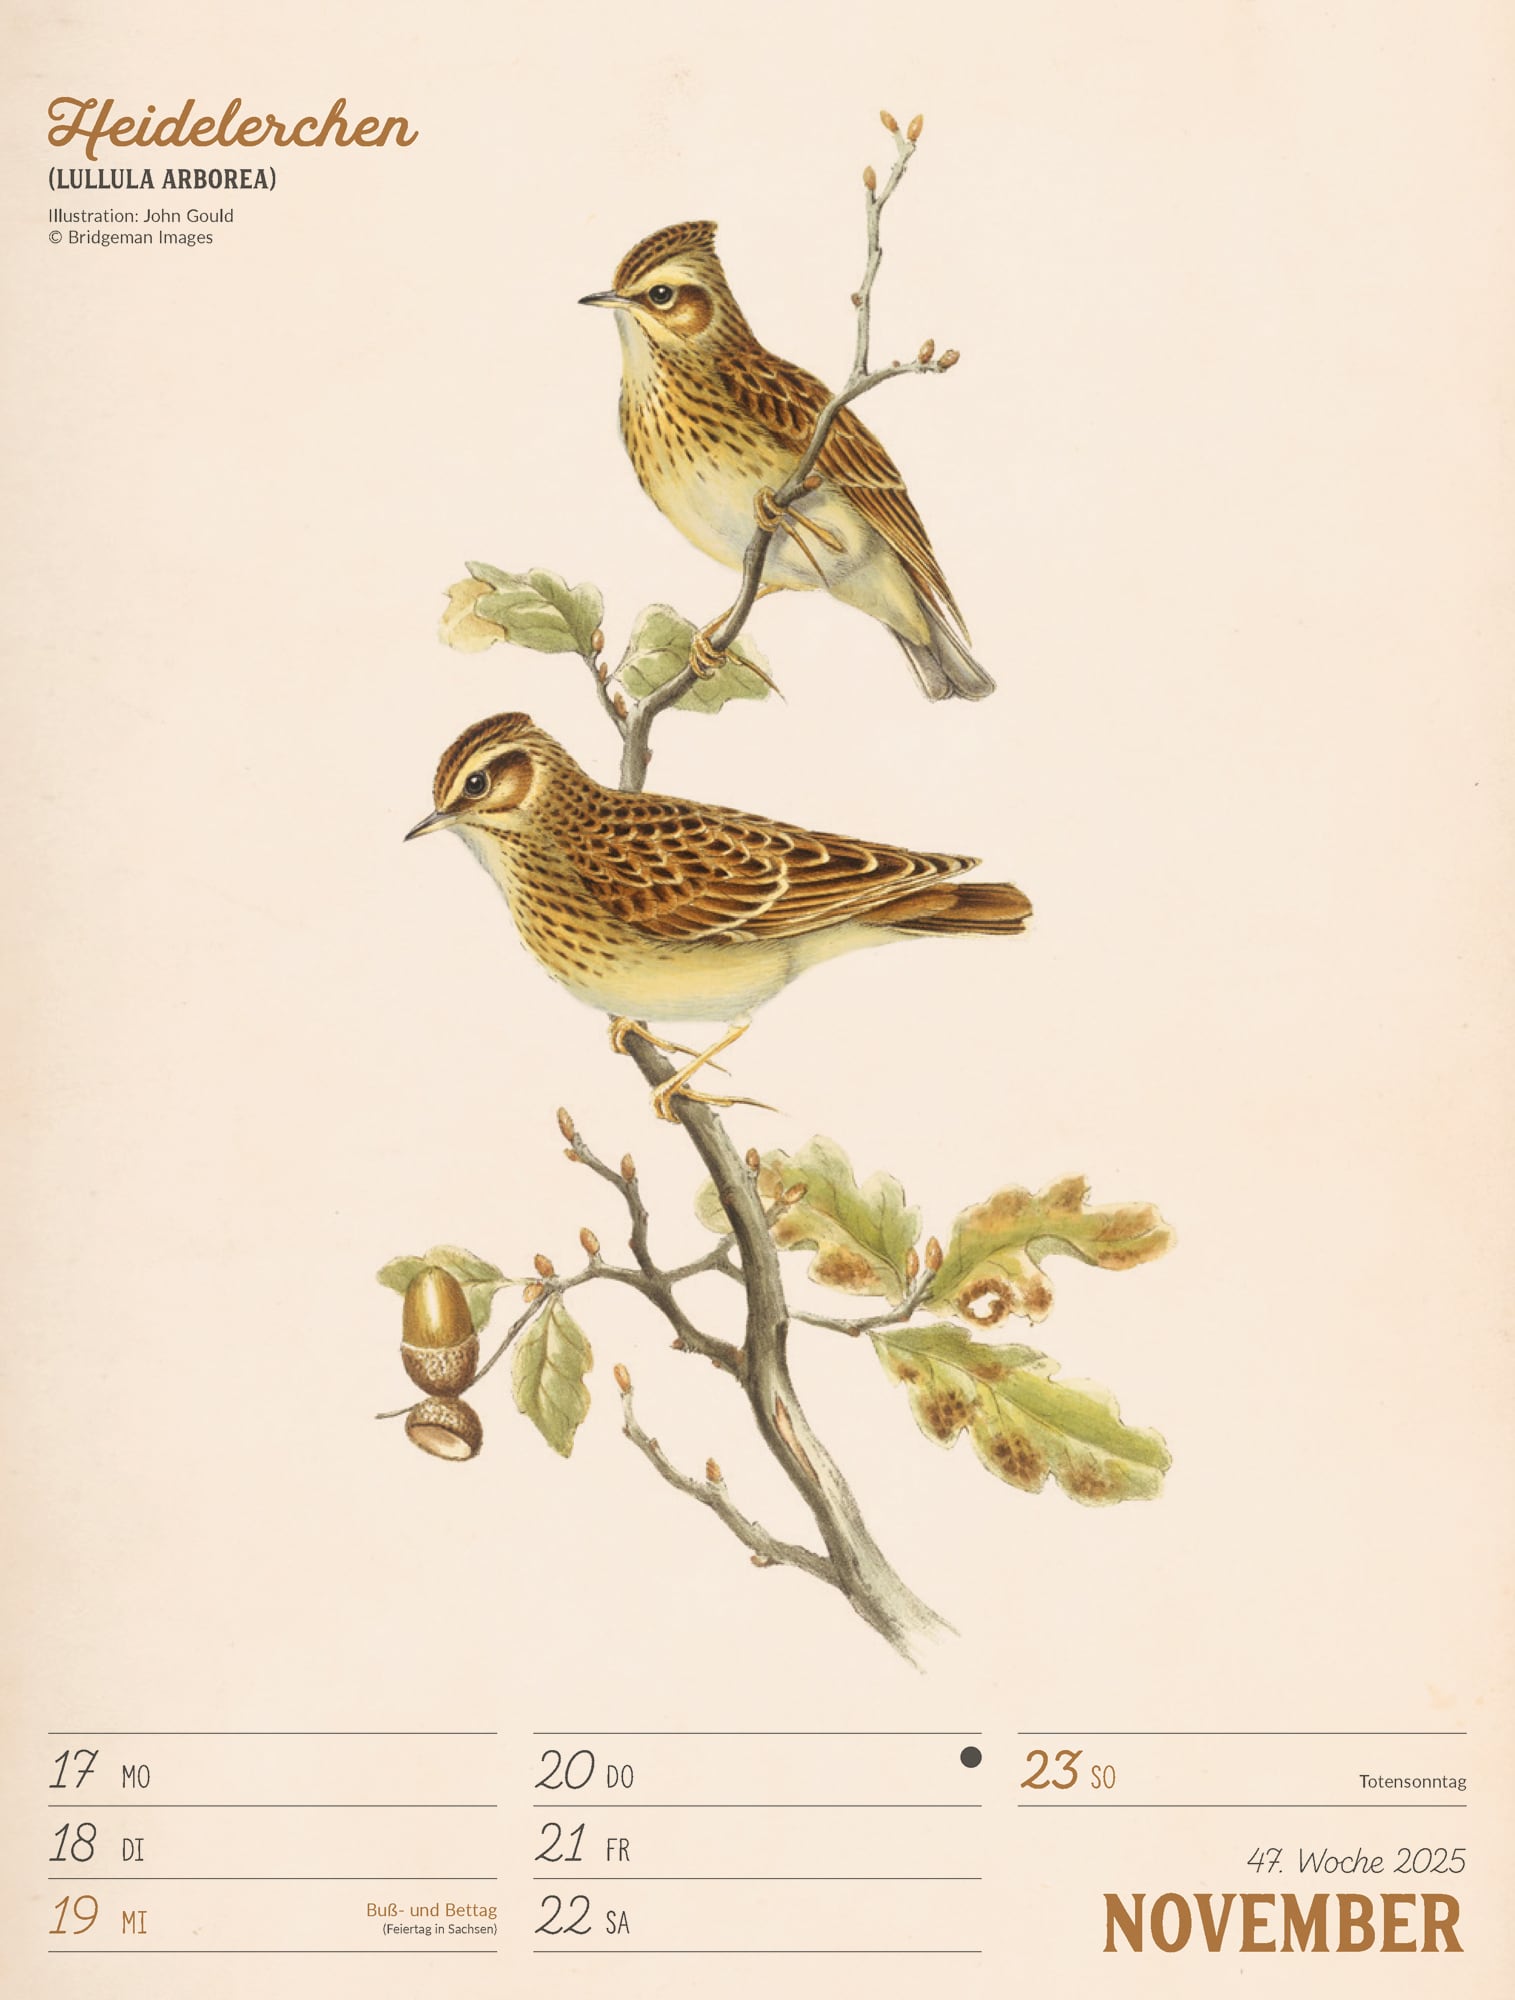 Ackermann Calendar The wonderful World of Birds 2025 - Weekly Planner - Inside View 50